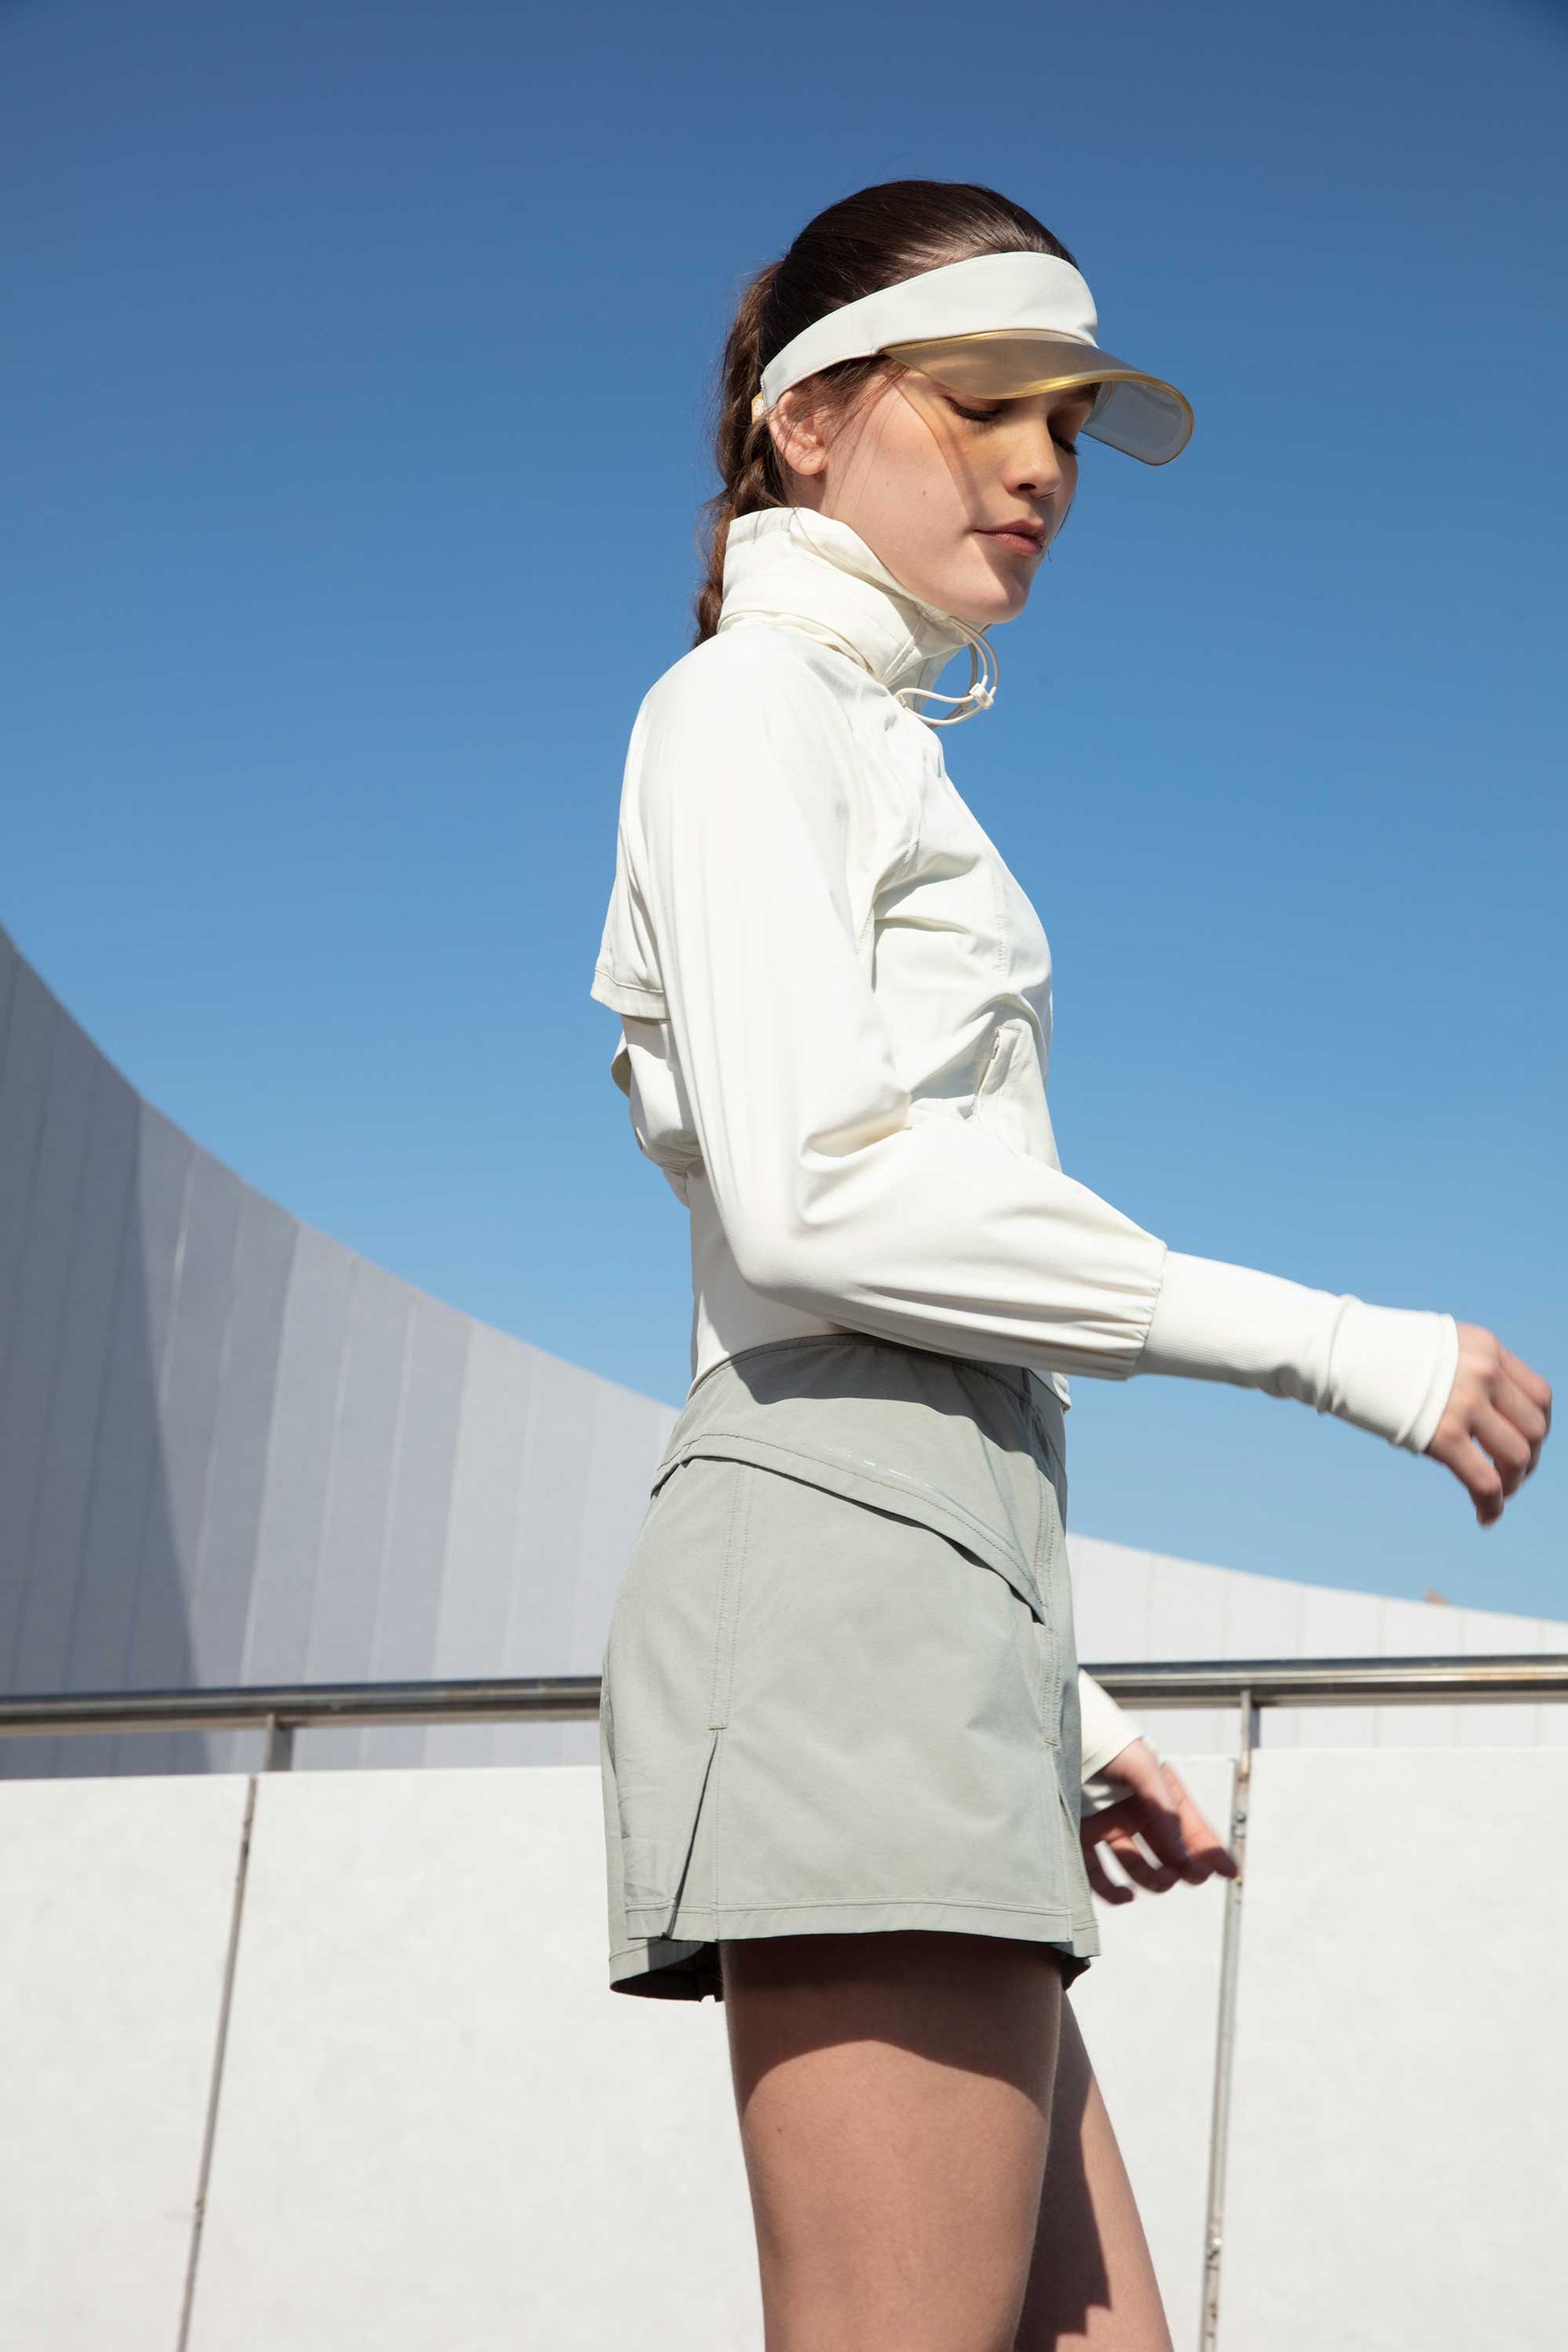 woman in white jacket and grey tennis skort